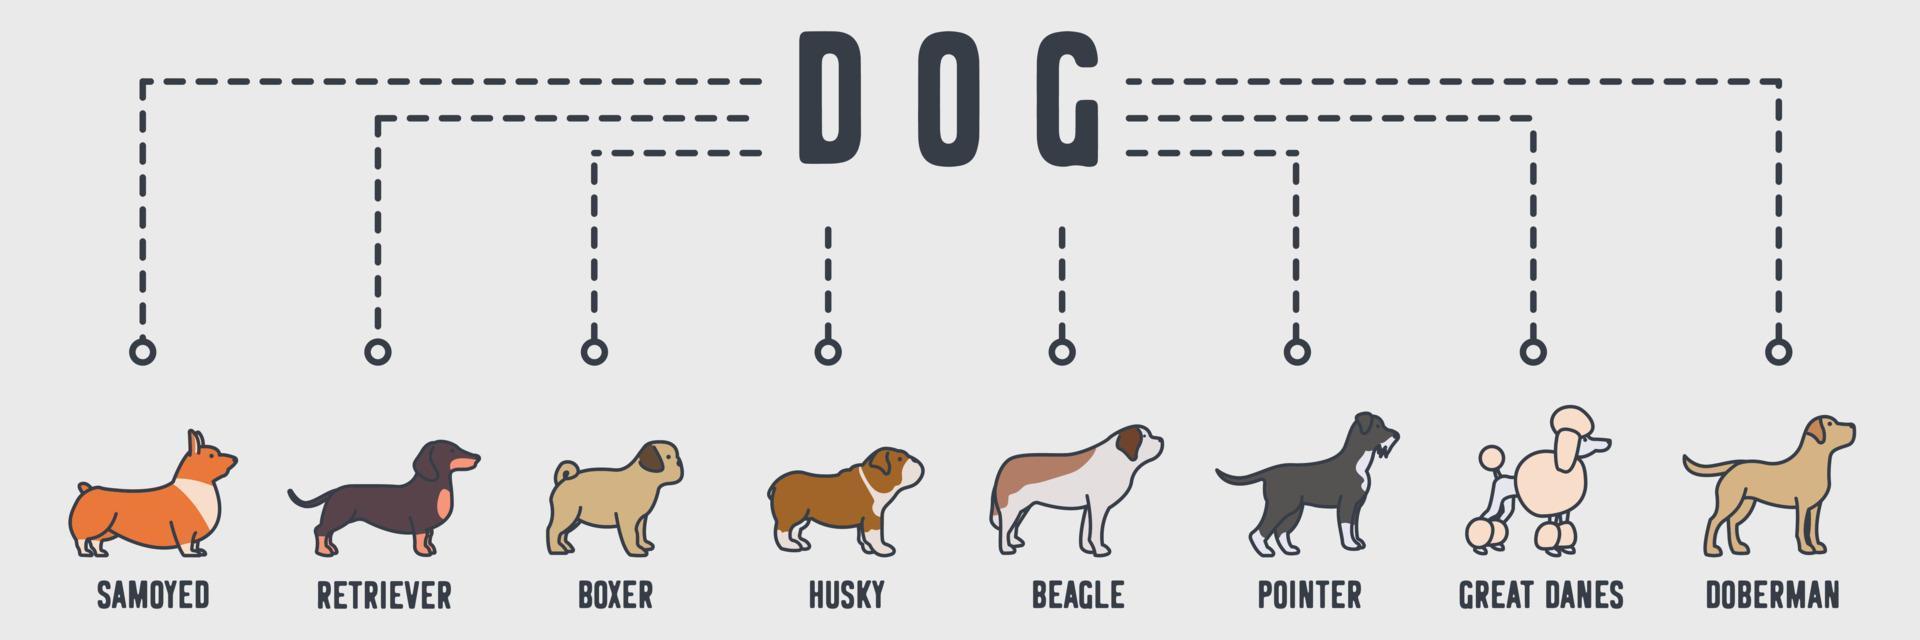 hond banner web pictogram. labrador, poedel, schnauzer, st bernard, bulldog, pug puppy, teckel, welsh corgi vector illustratie concept.